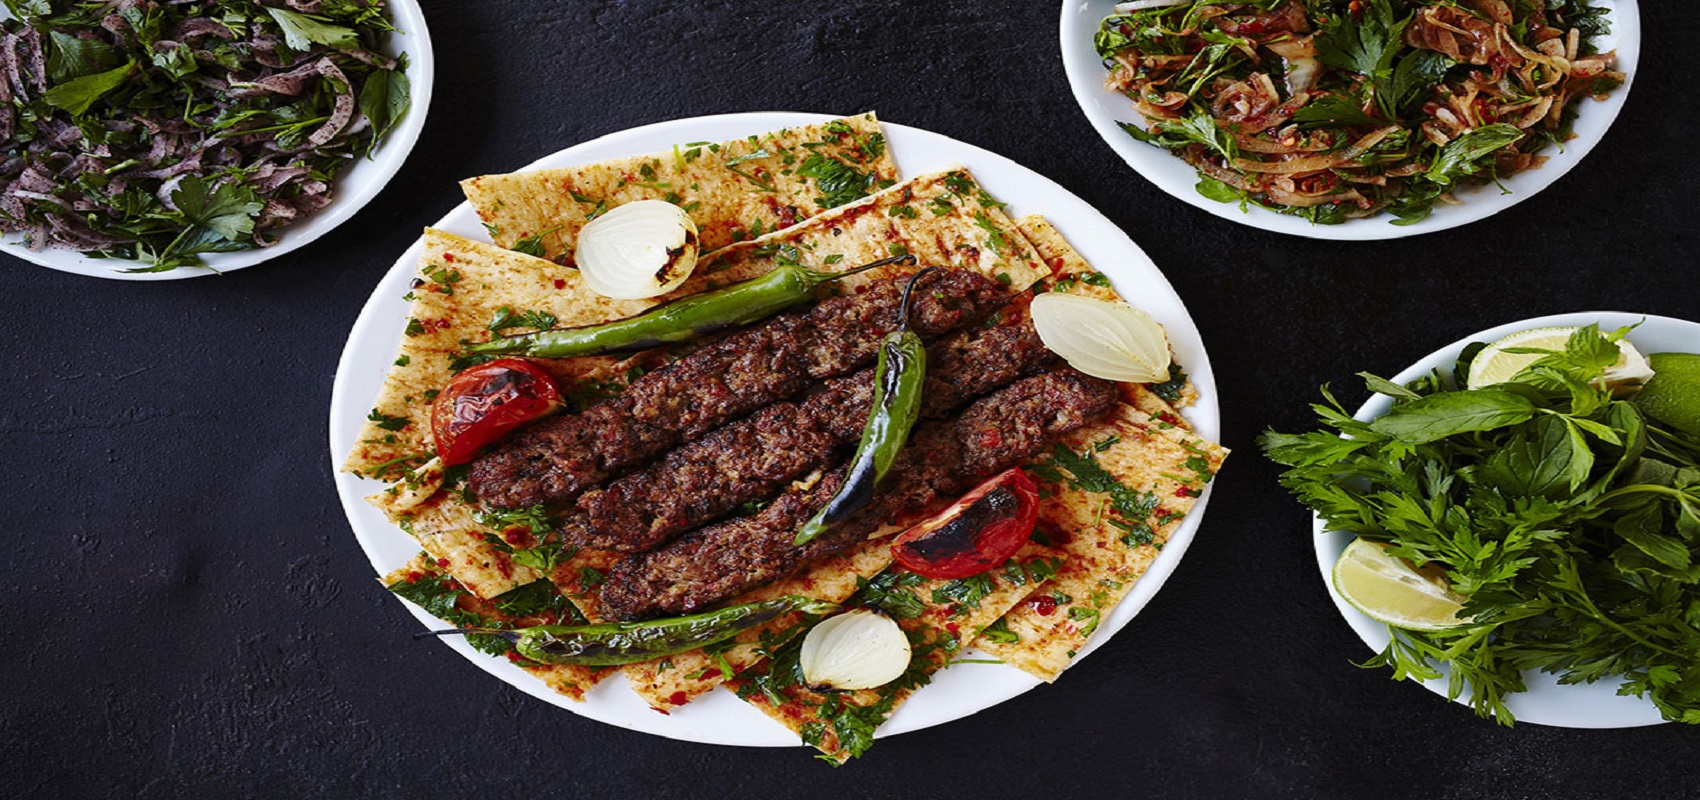 Middle East Food Culture Shish Kebab